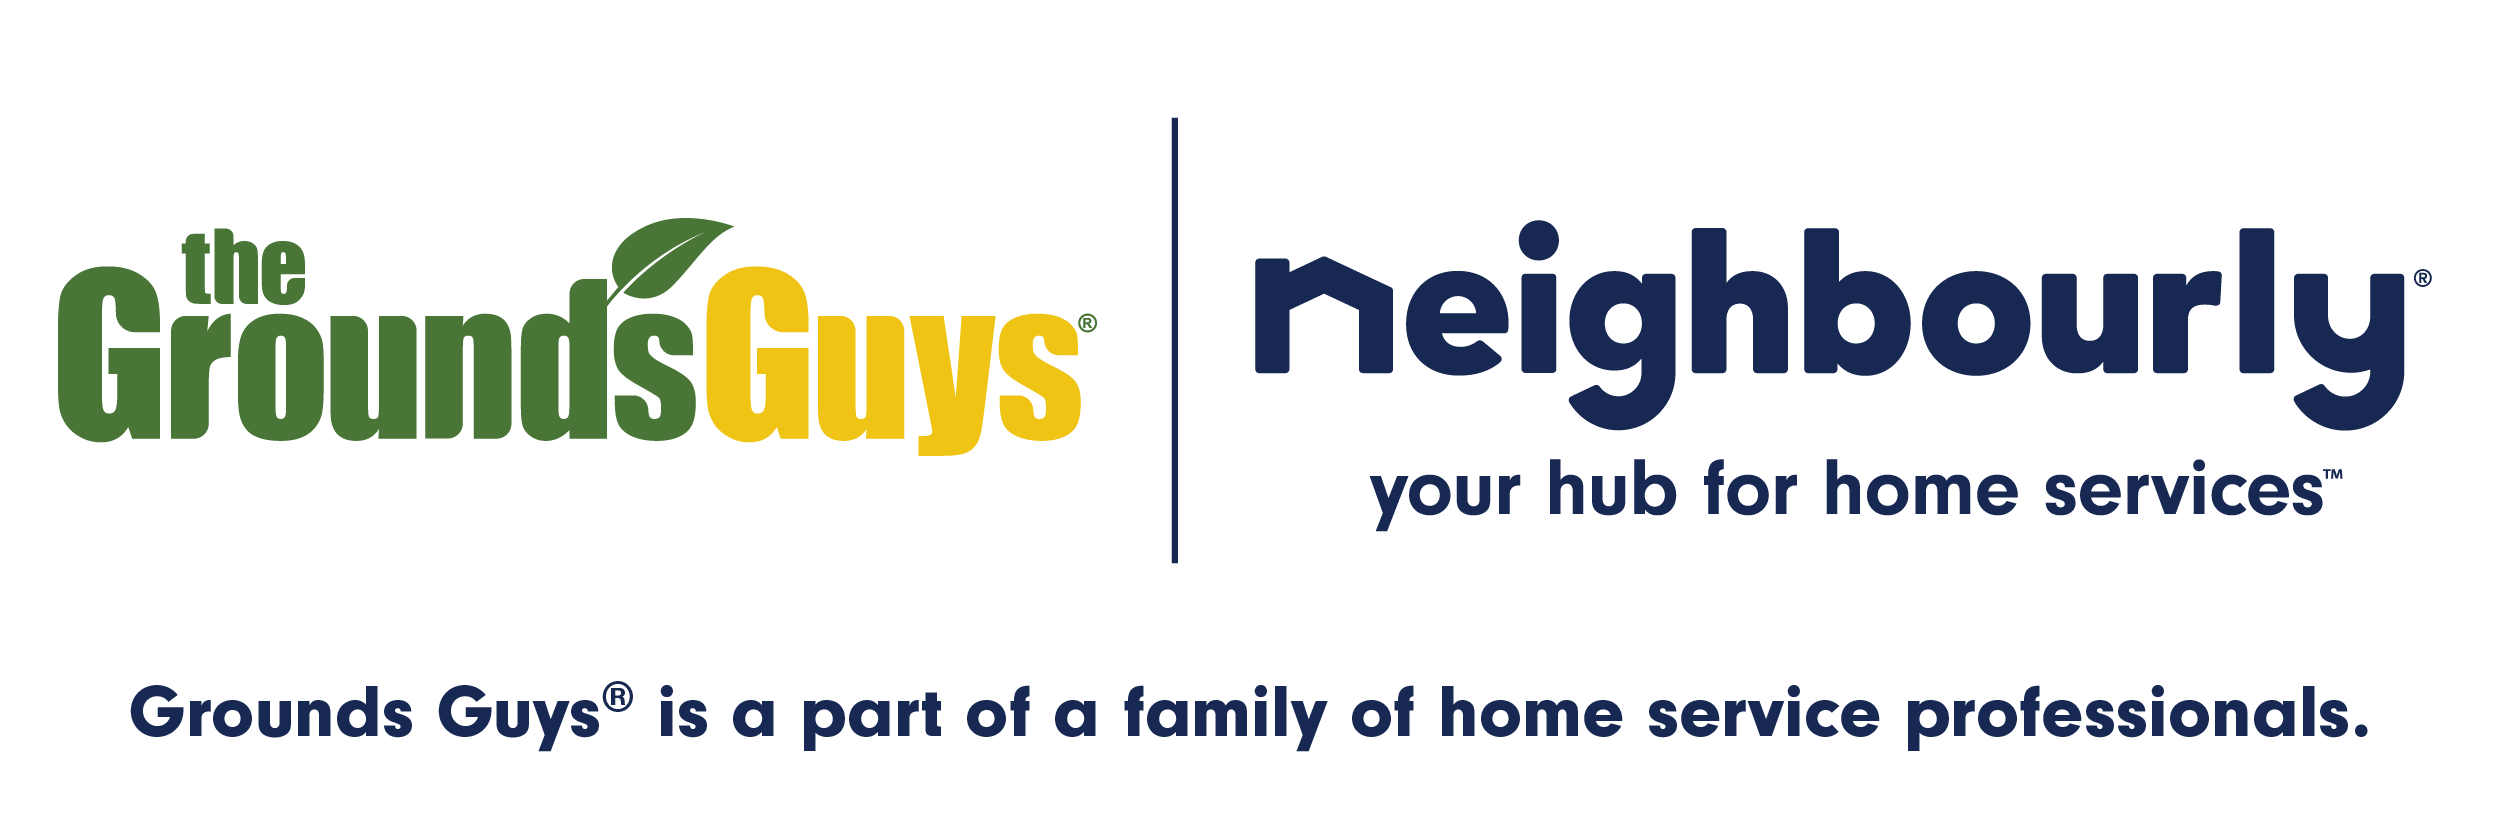 Neighborly's Logo